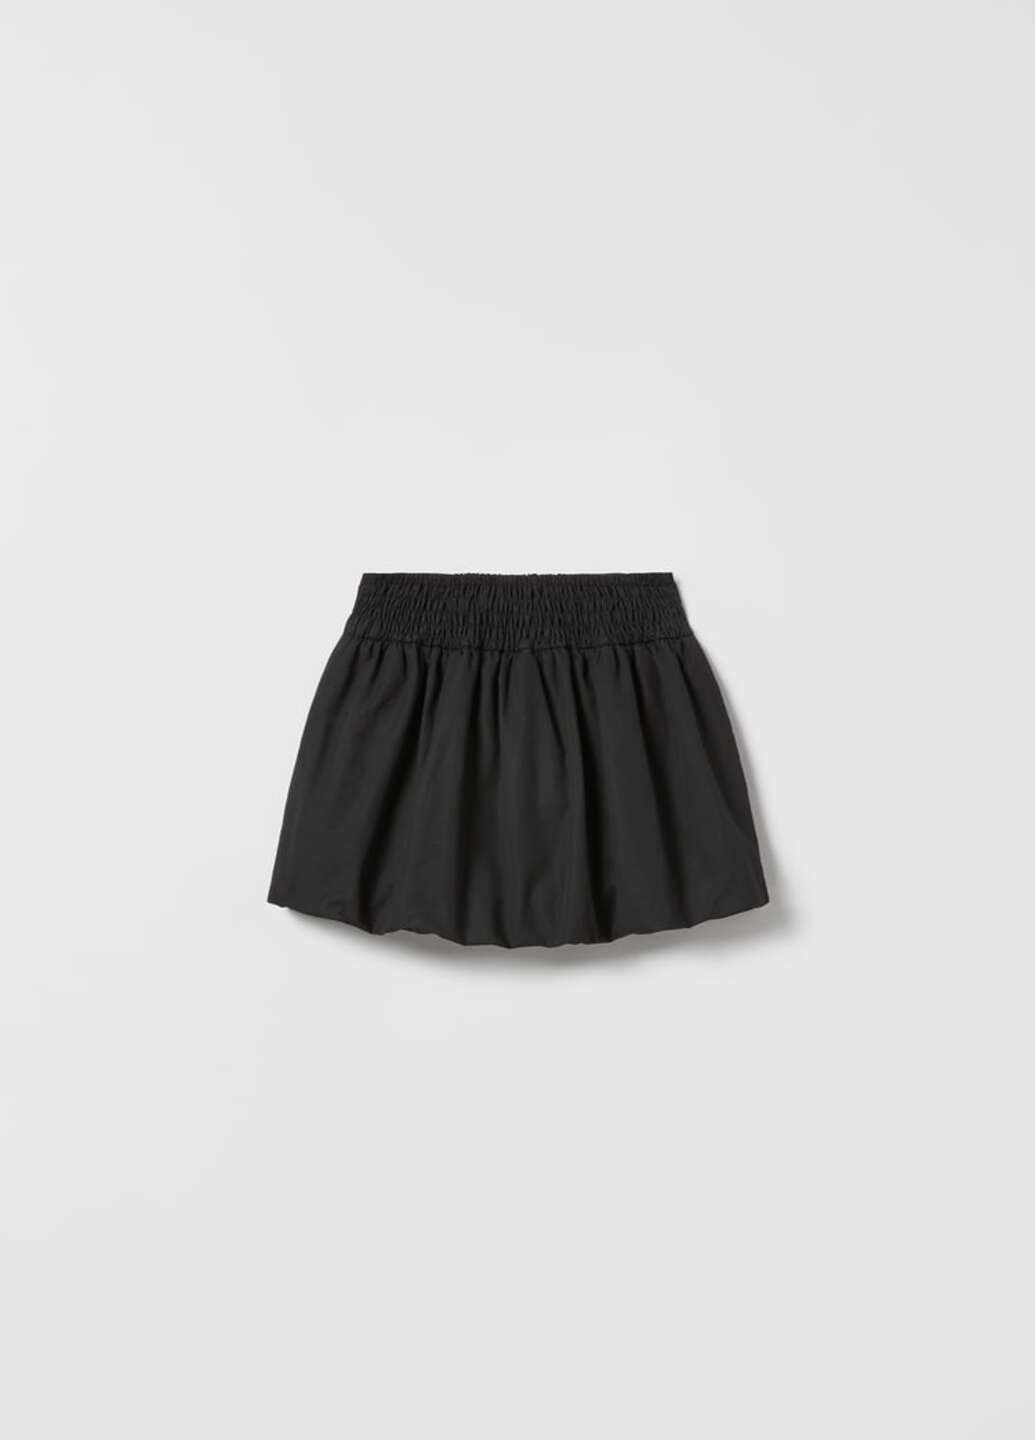 Черная юбка Zara